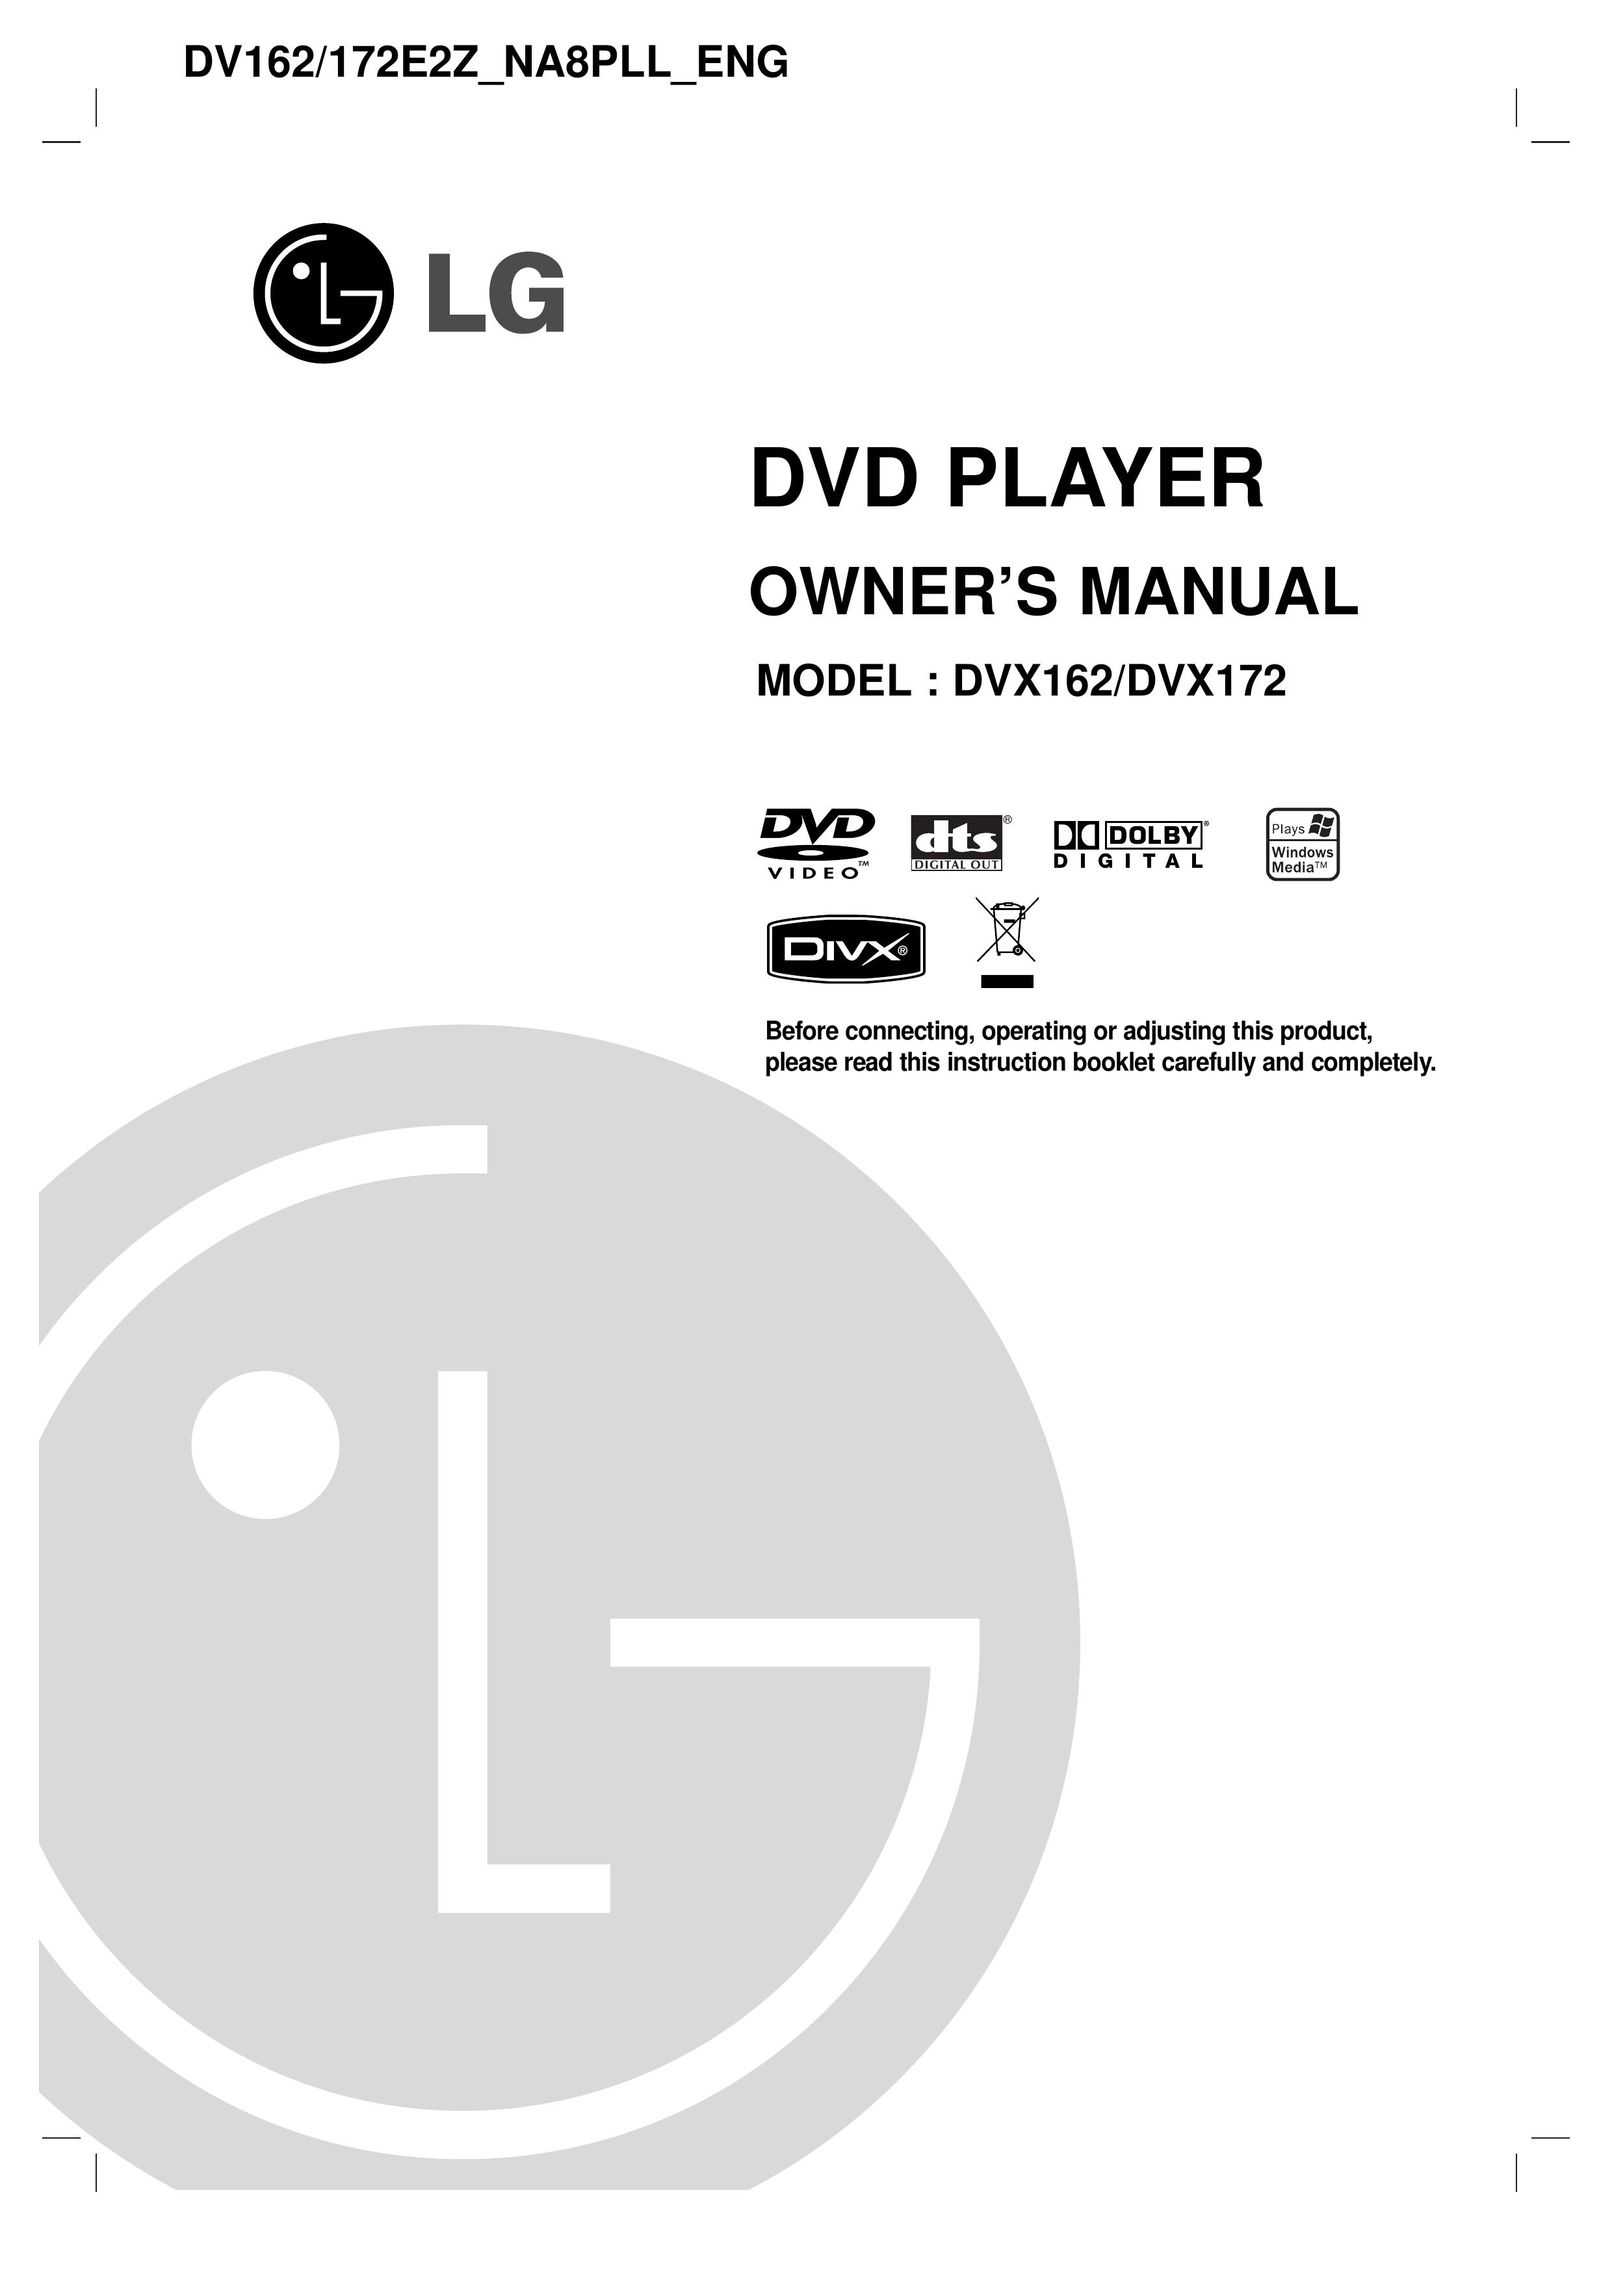 LG Electronics DVX172 DVD Player User Manual